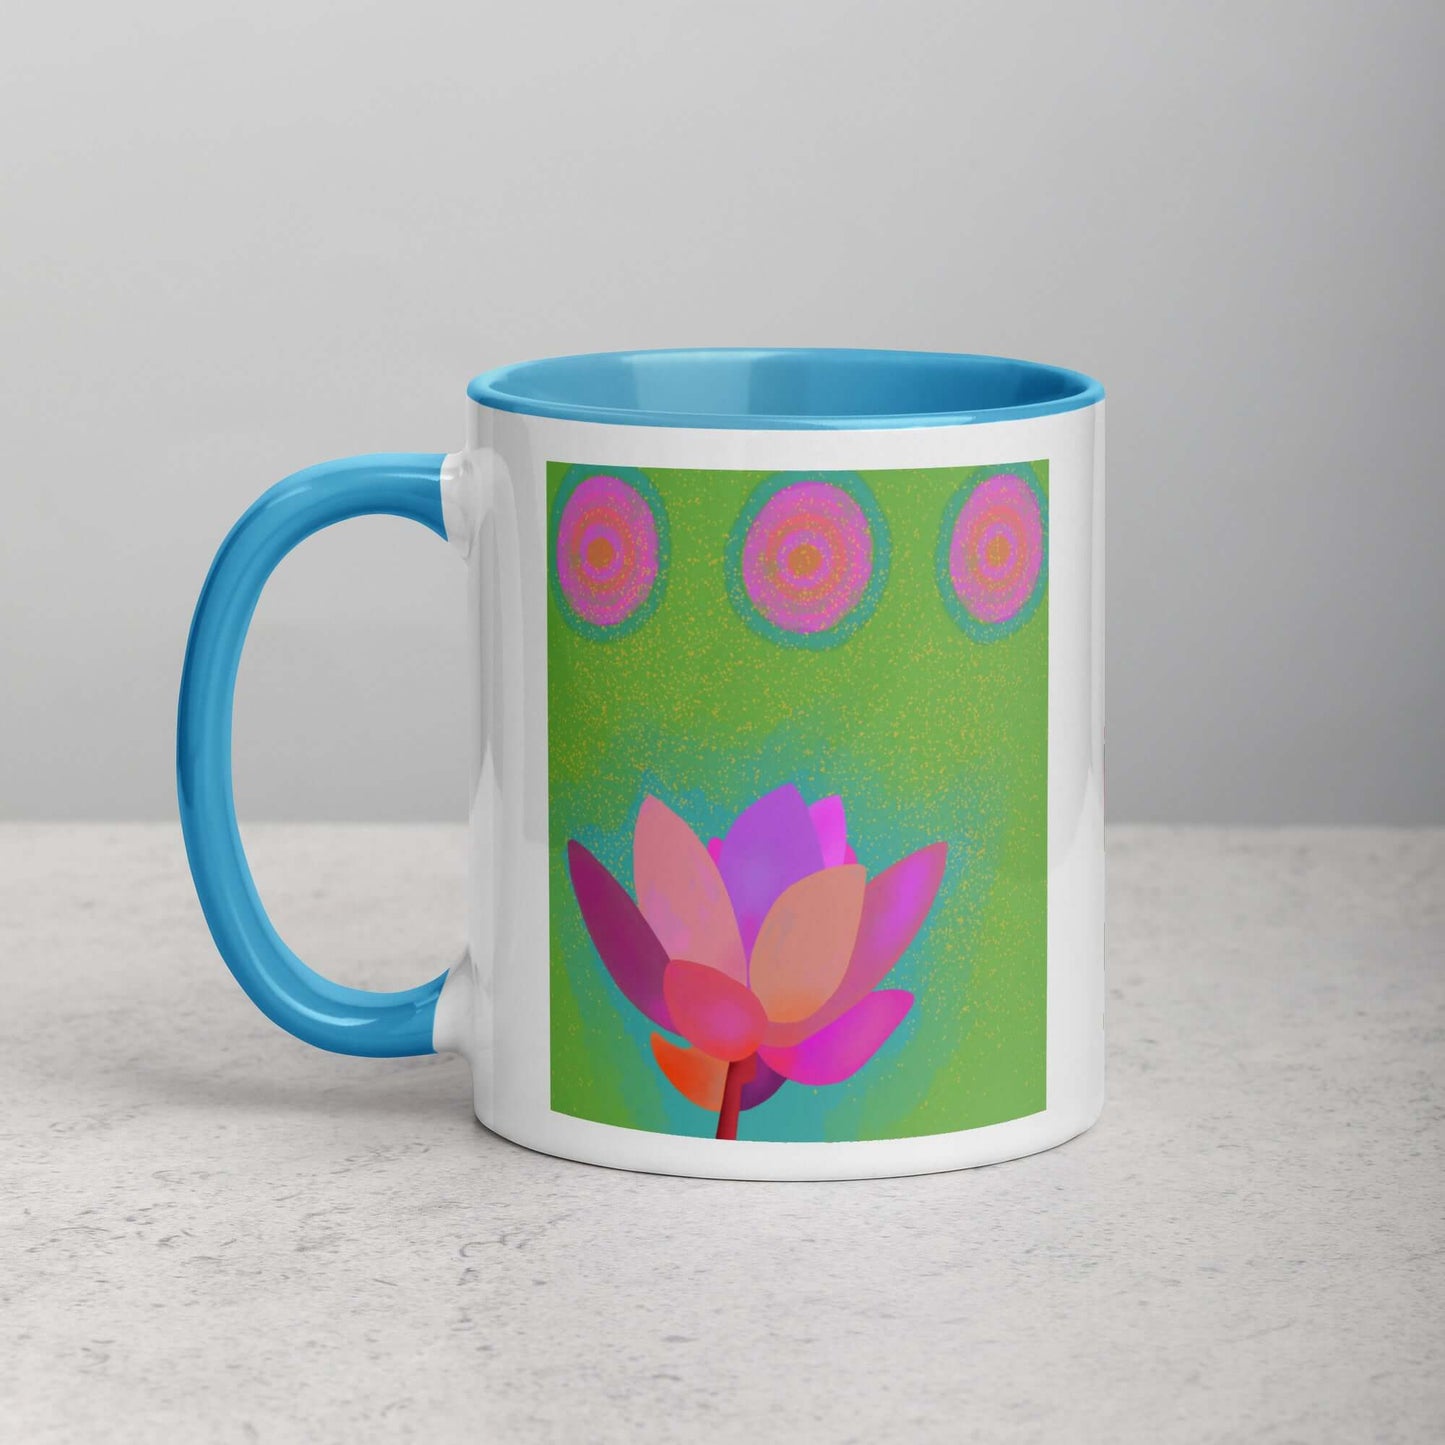 Pink Lotus Flower on Green Background “Lotus Dots” Mug with Light Blue Color Inside Left Handed Front View